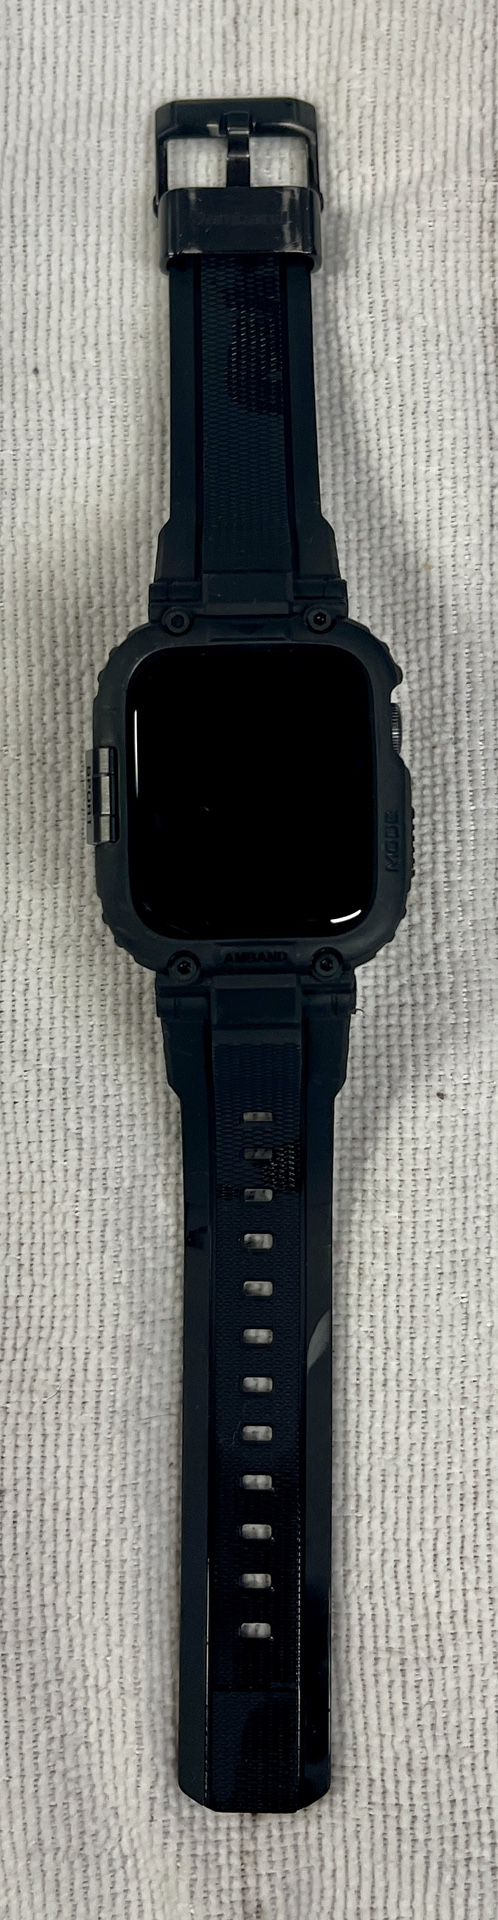 Apple Watch Series 4 GPS